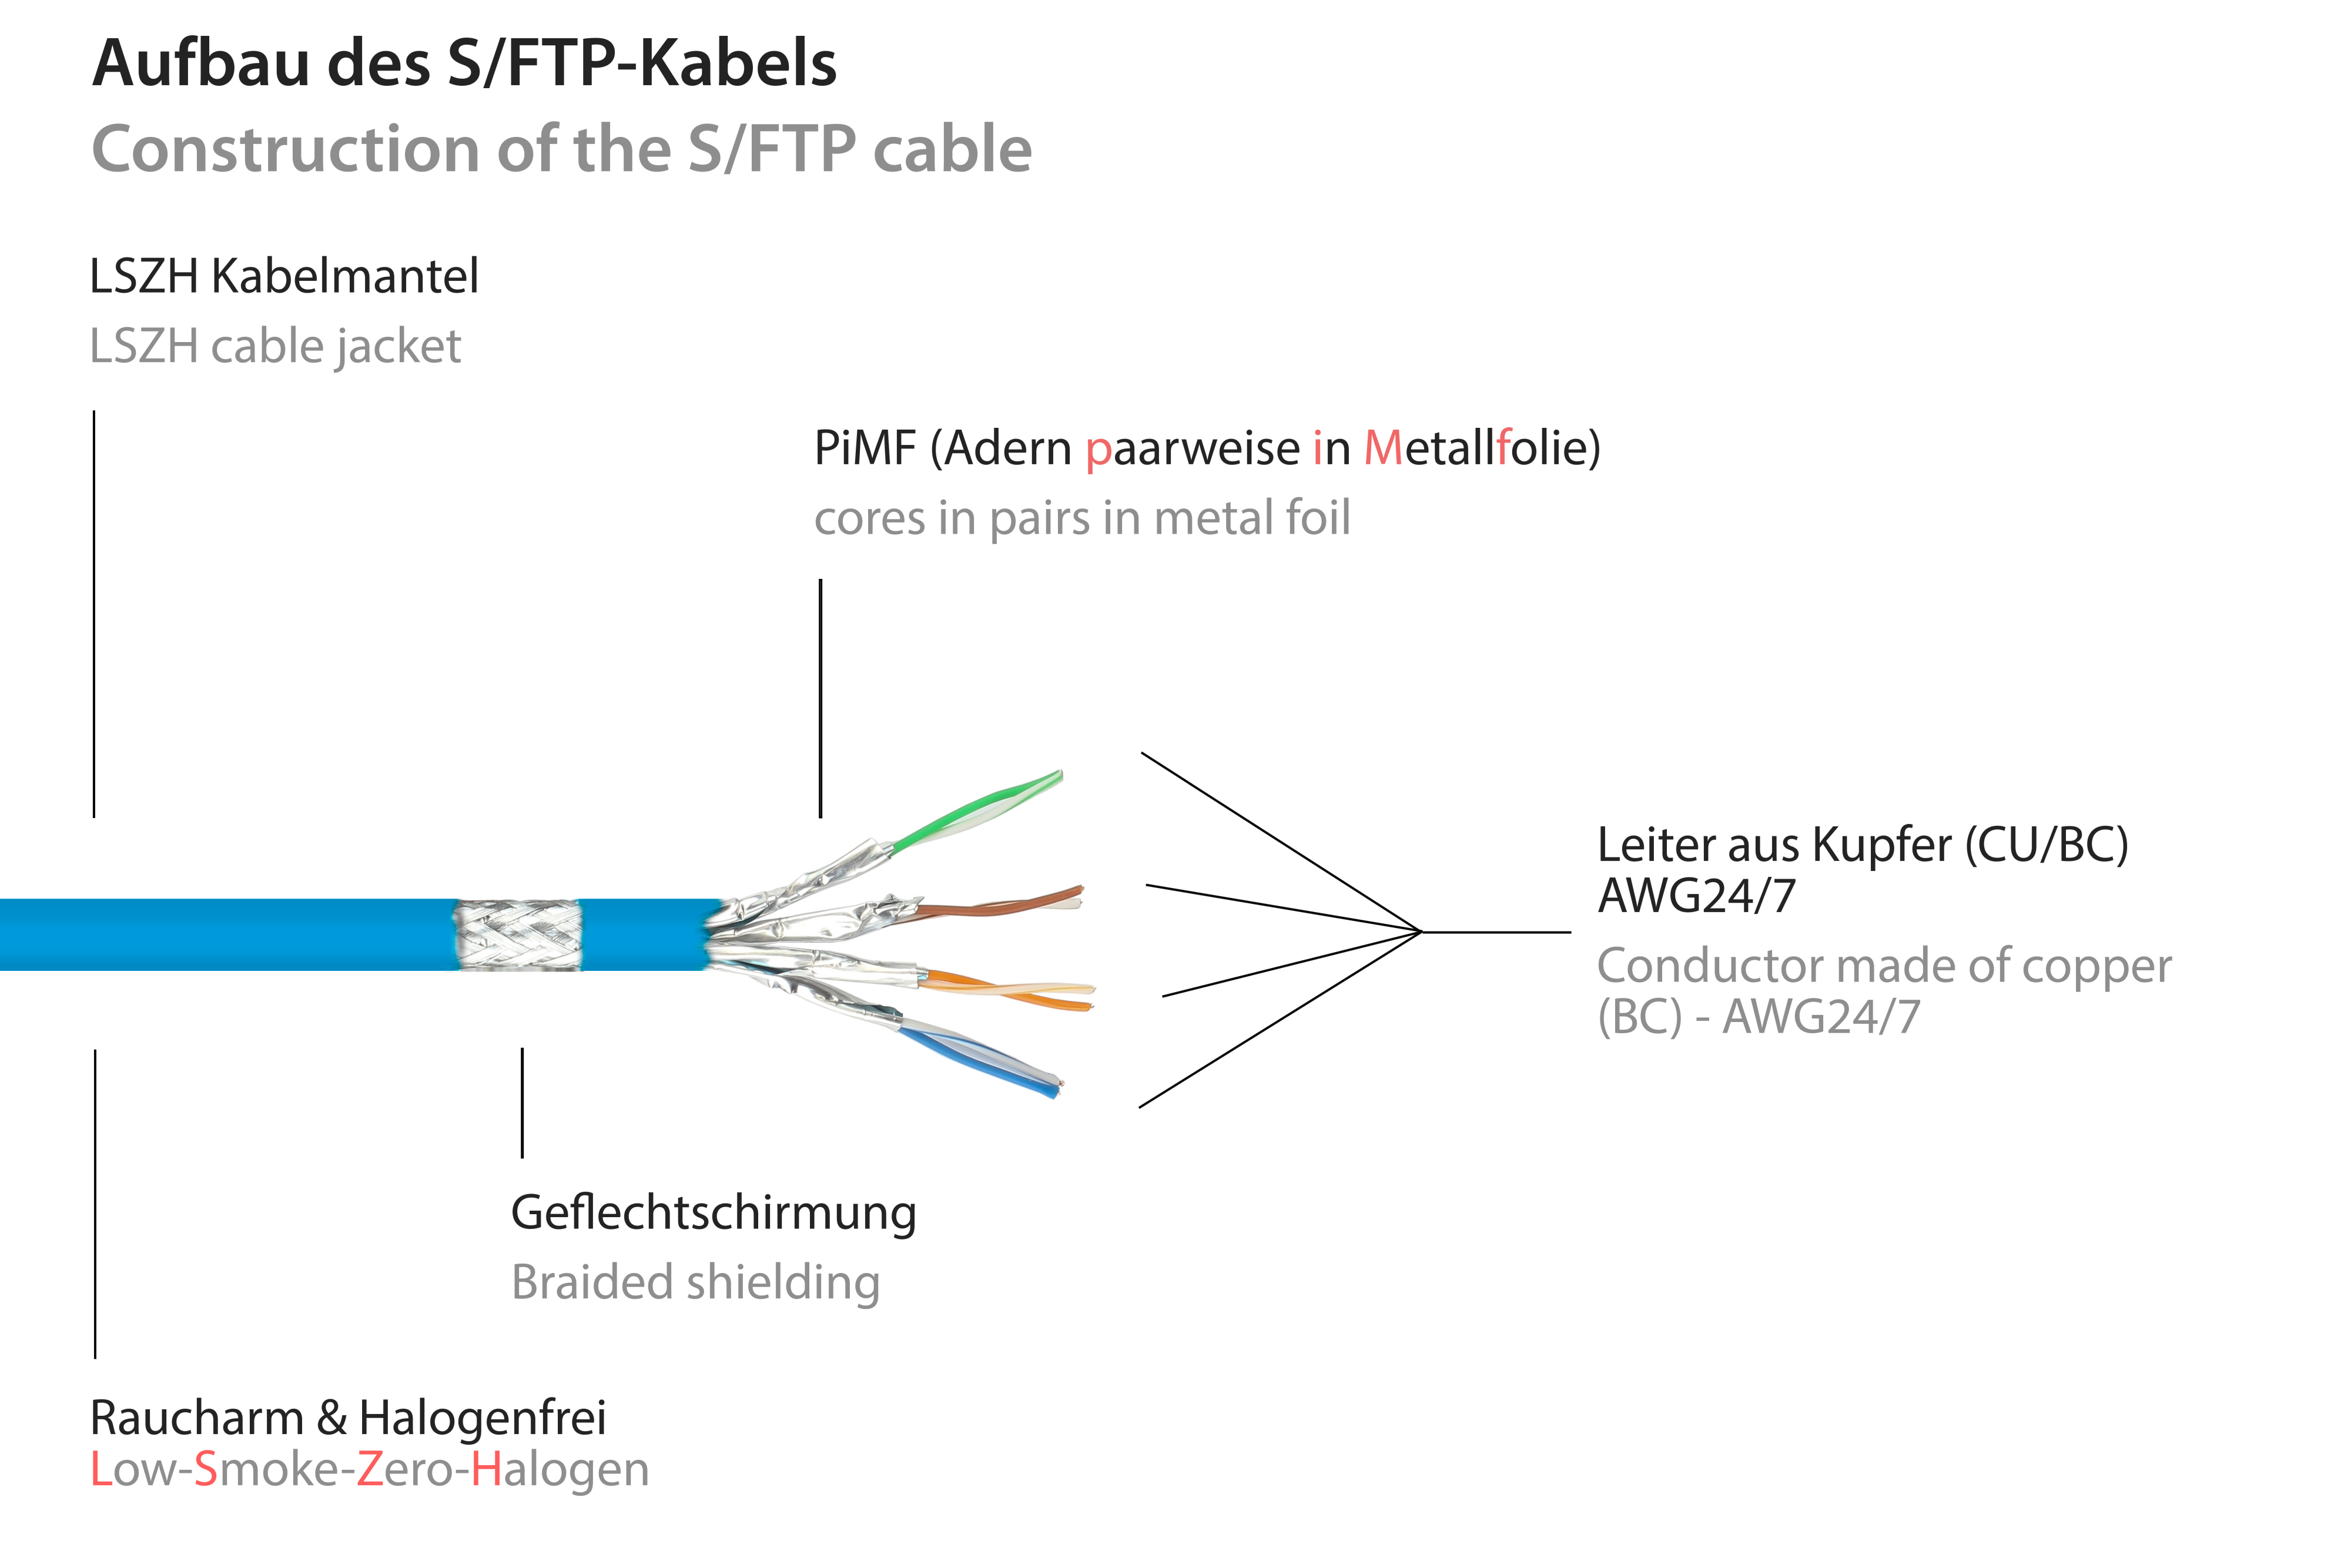 halogenfrei (LSZH), 5 CONNECTIONS 40Gbit/s, S/FTP, m GOOD blau, 2000MHz, Netzwerkkabel, PiMF,